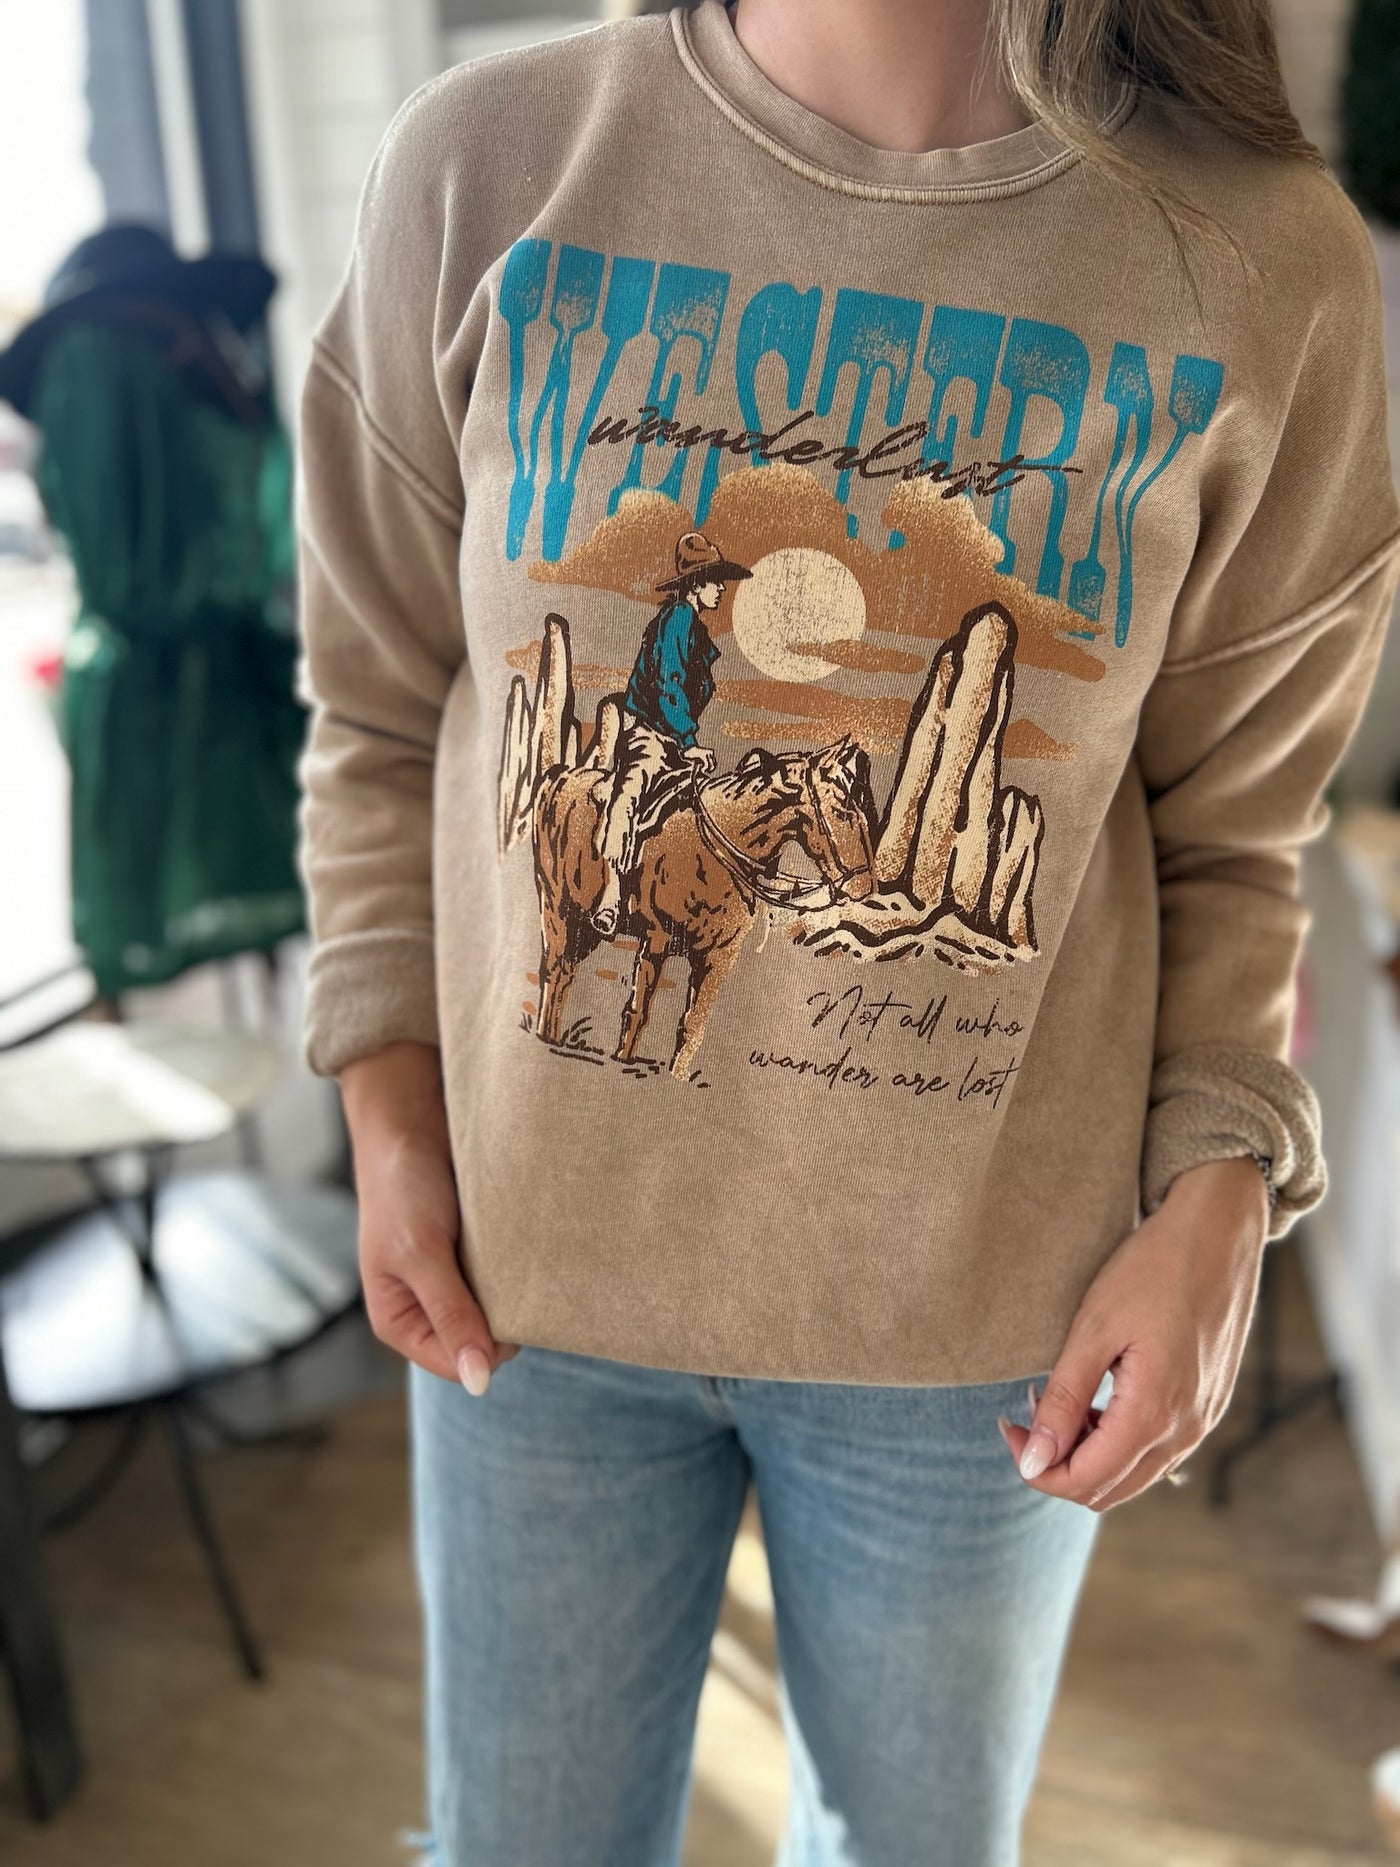 Western Wanderlust Sweatshirt